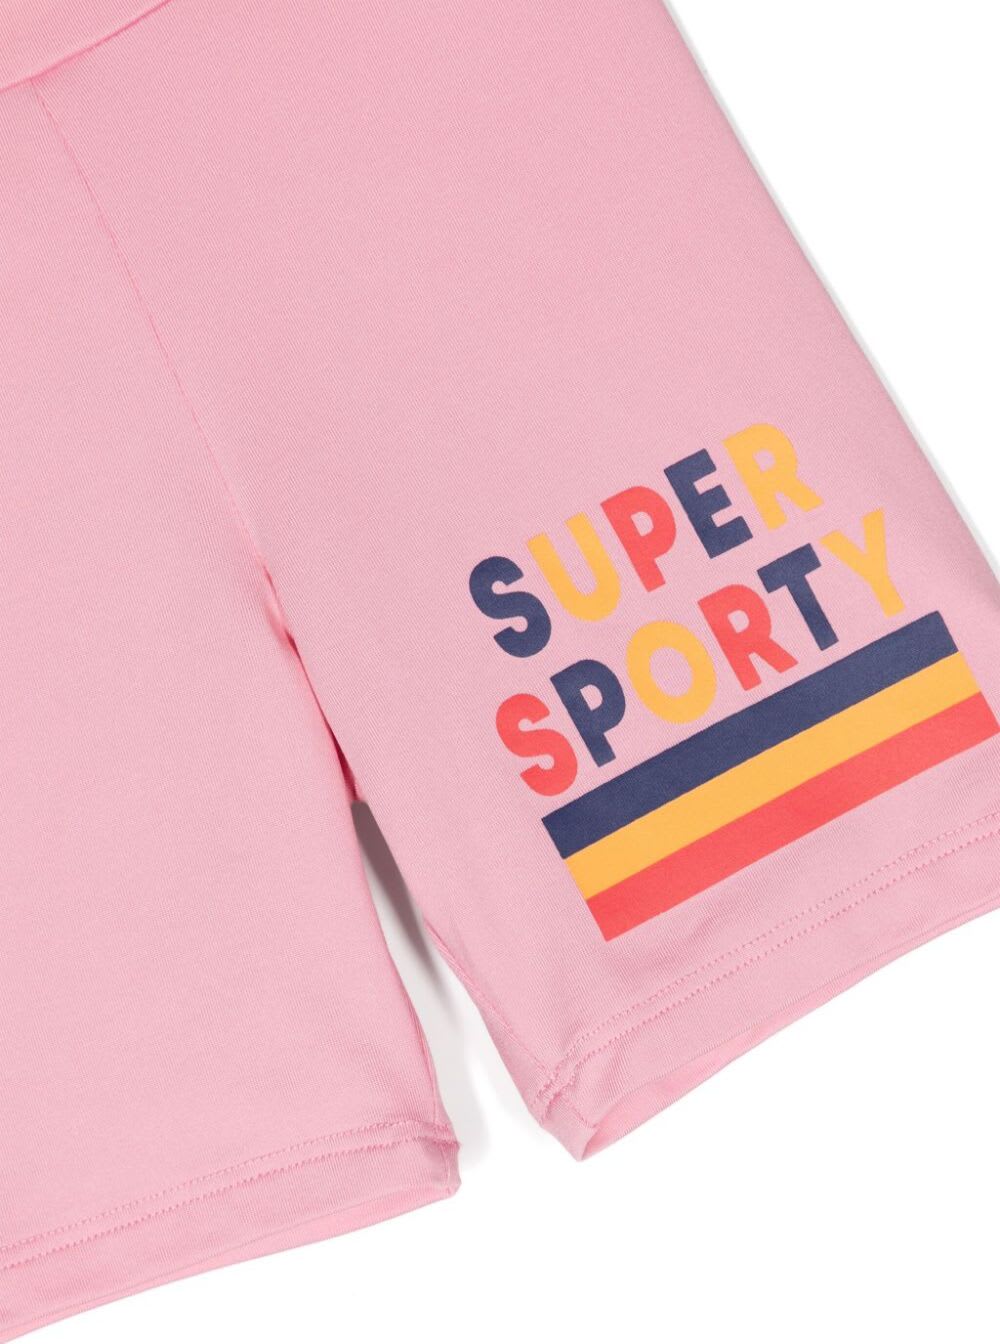 Shop Mini Rodini Pink Biker Shorts With Super Sporty Print In Stretch Fabric Girl